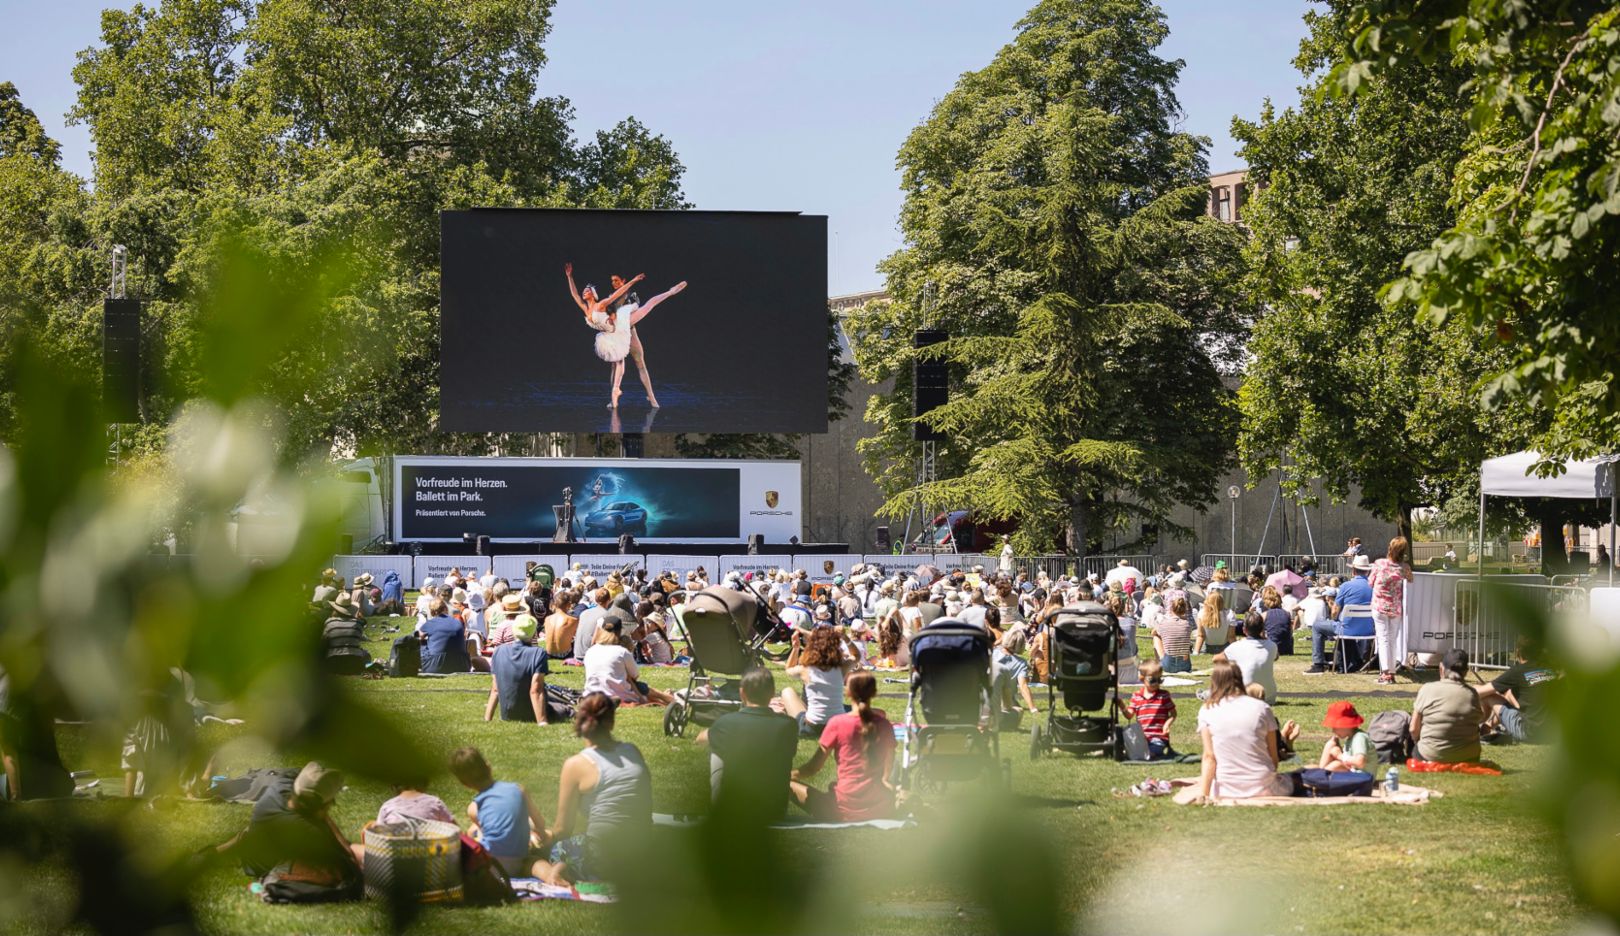 Ballett im Park, Stuttgart, 2022, Porsche AG